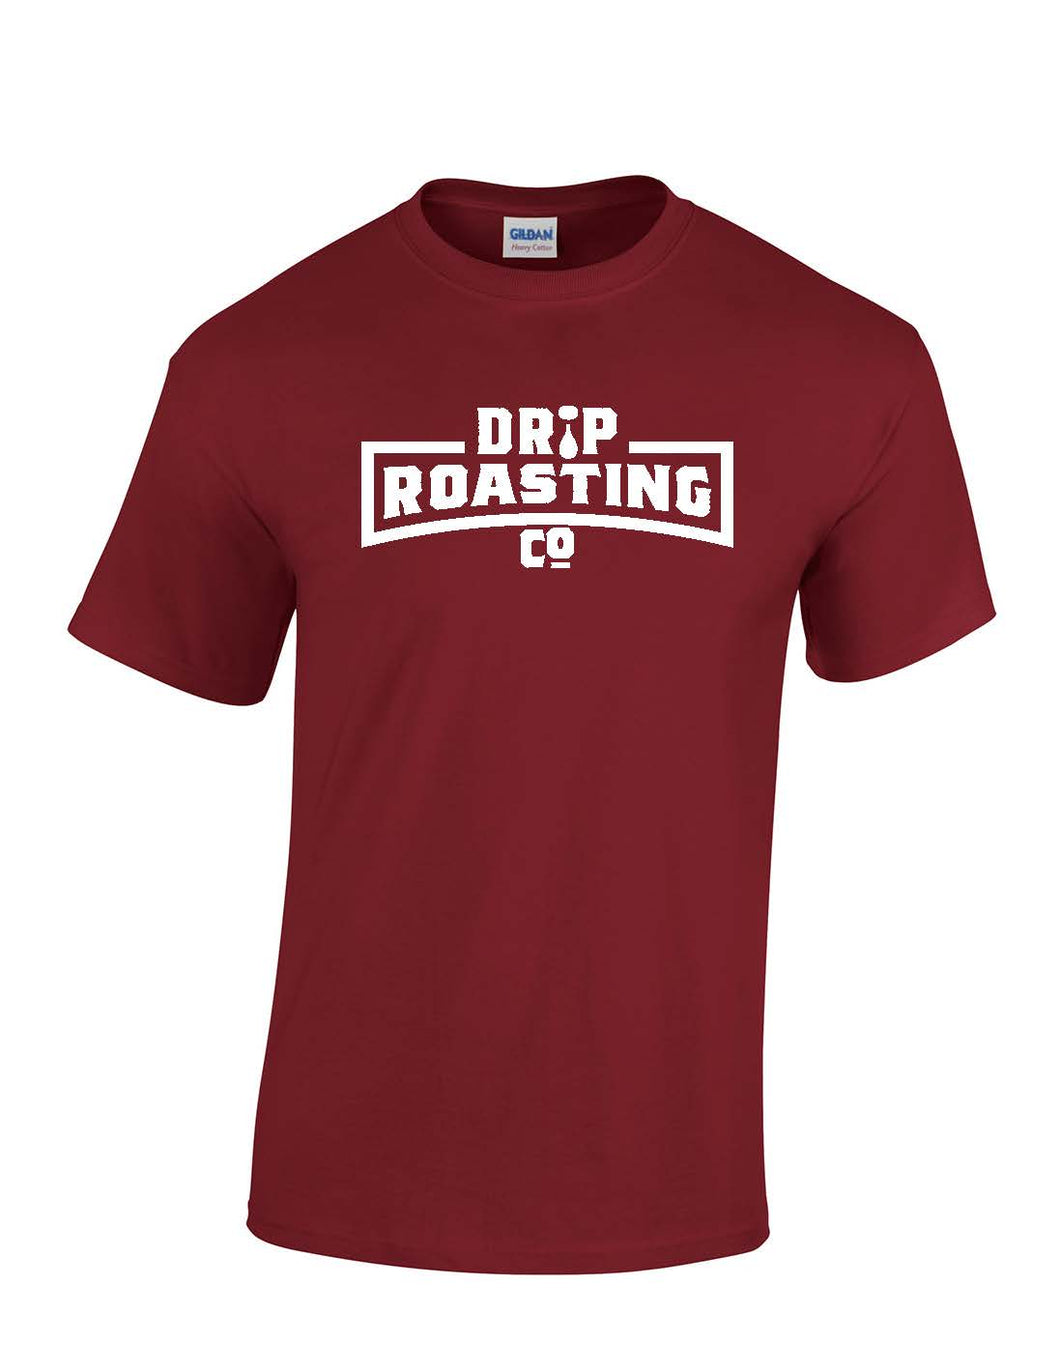 Drip Roasting Co. T-shirt